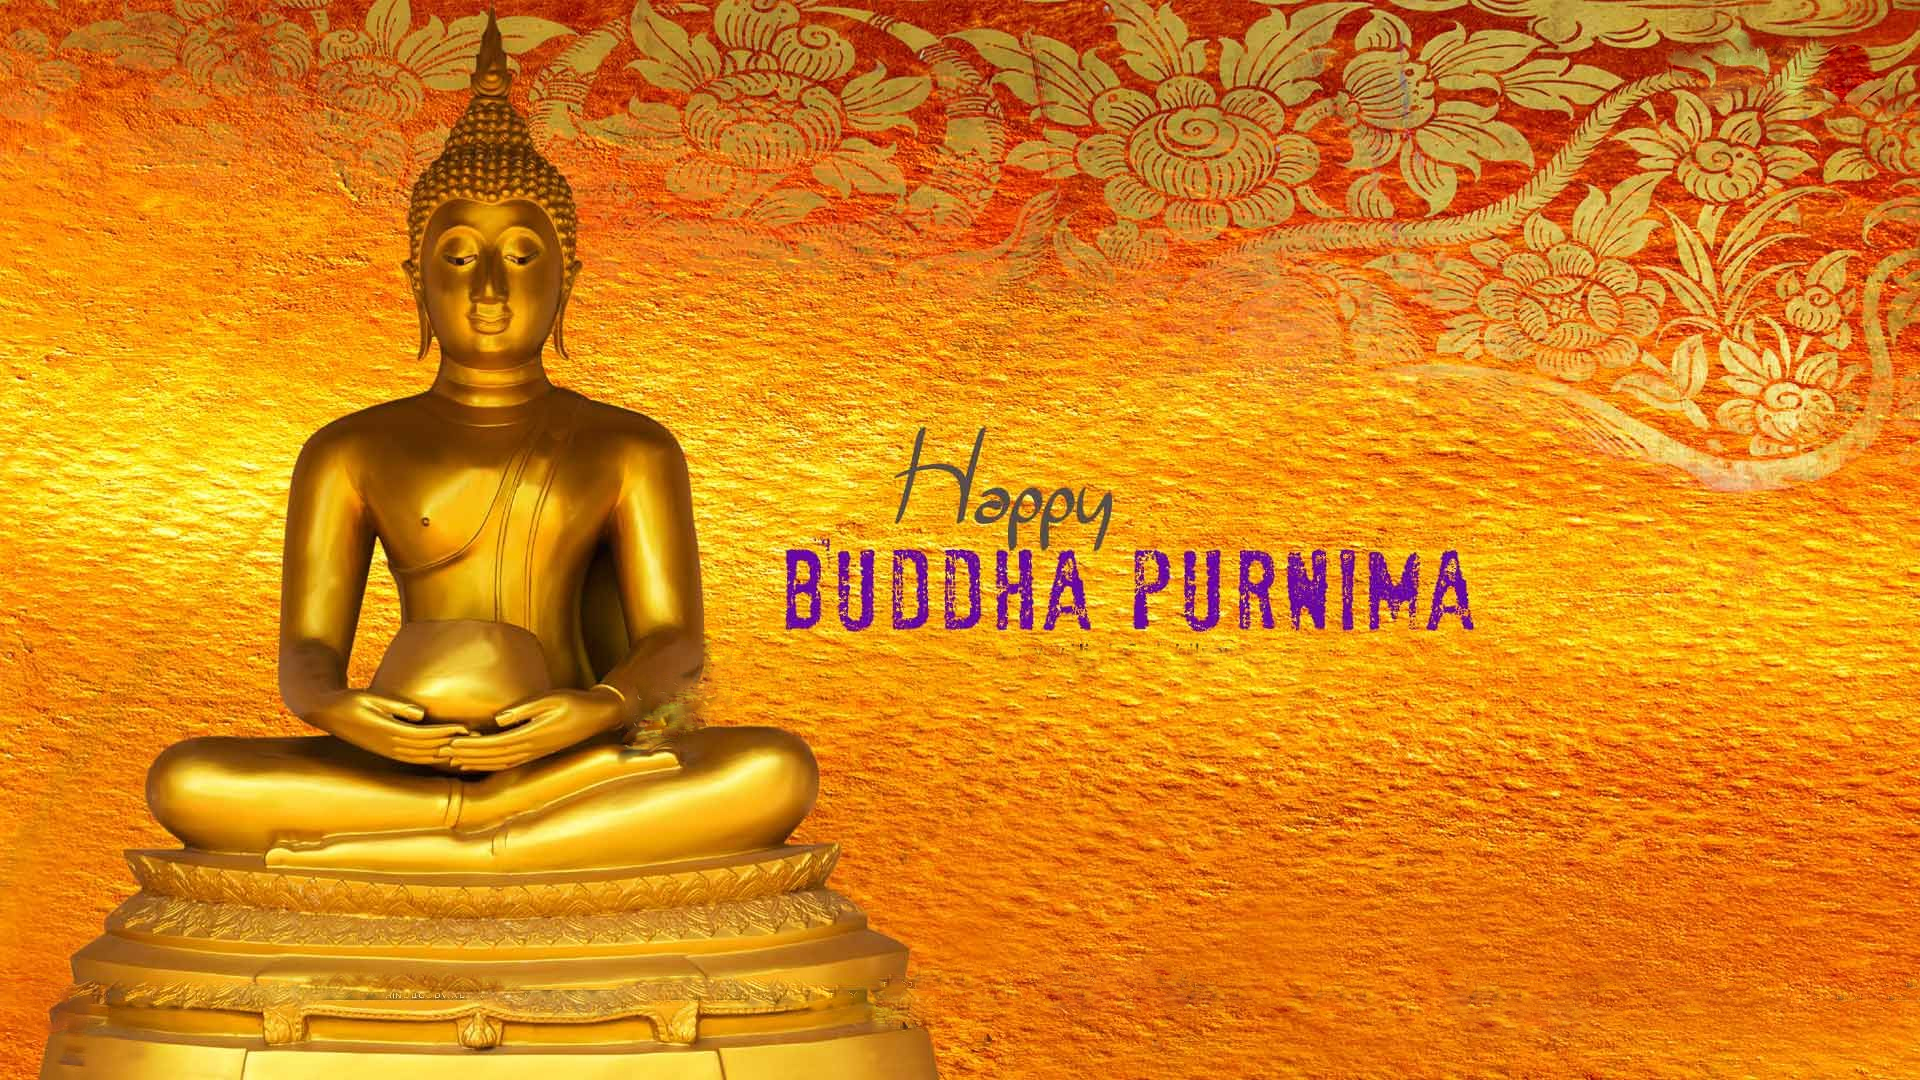 Happy Buddha Purnima Hd Wallpapers Free Download